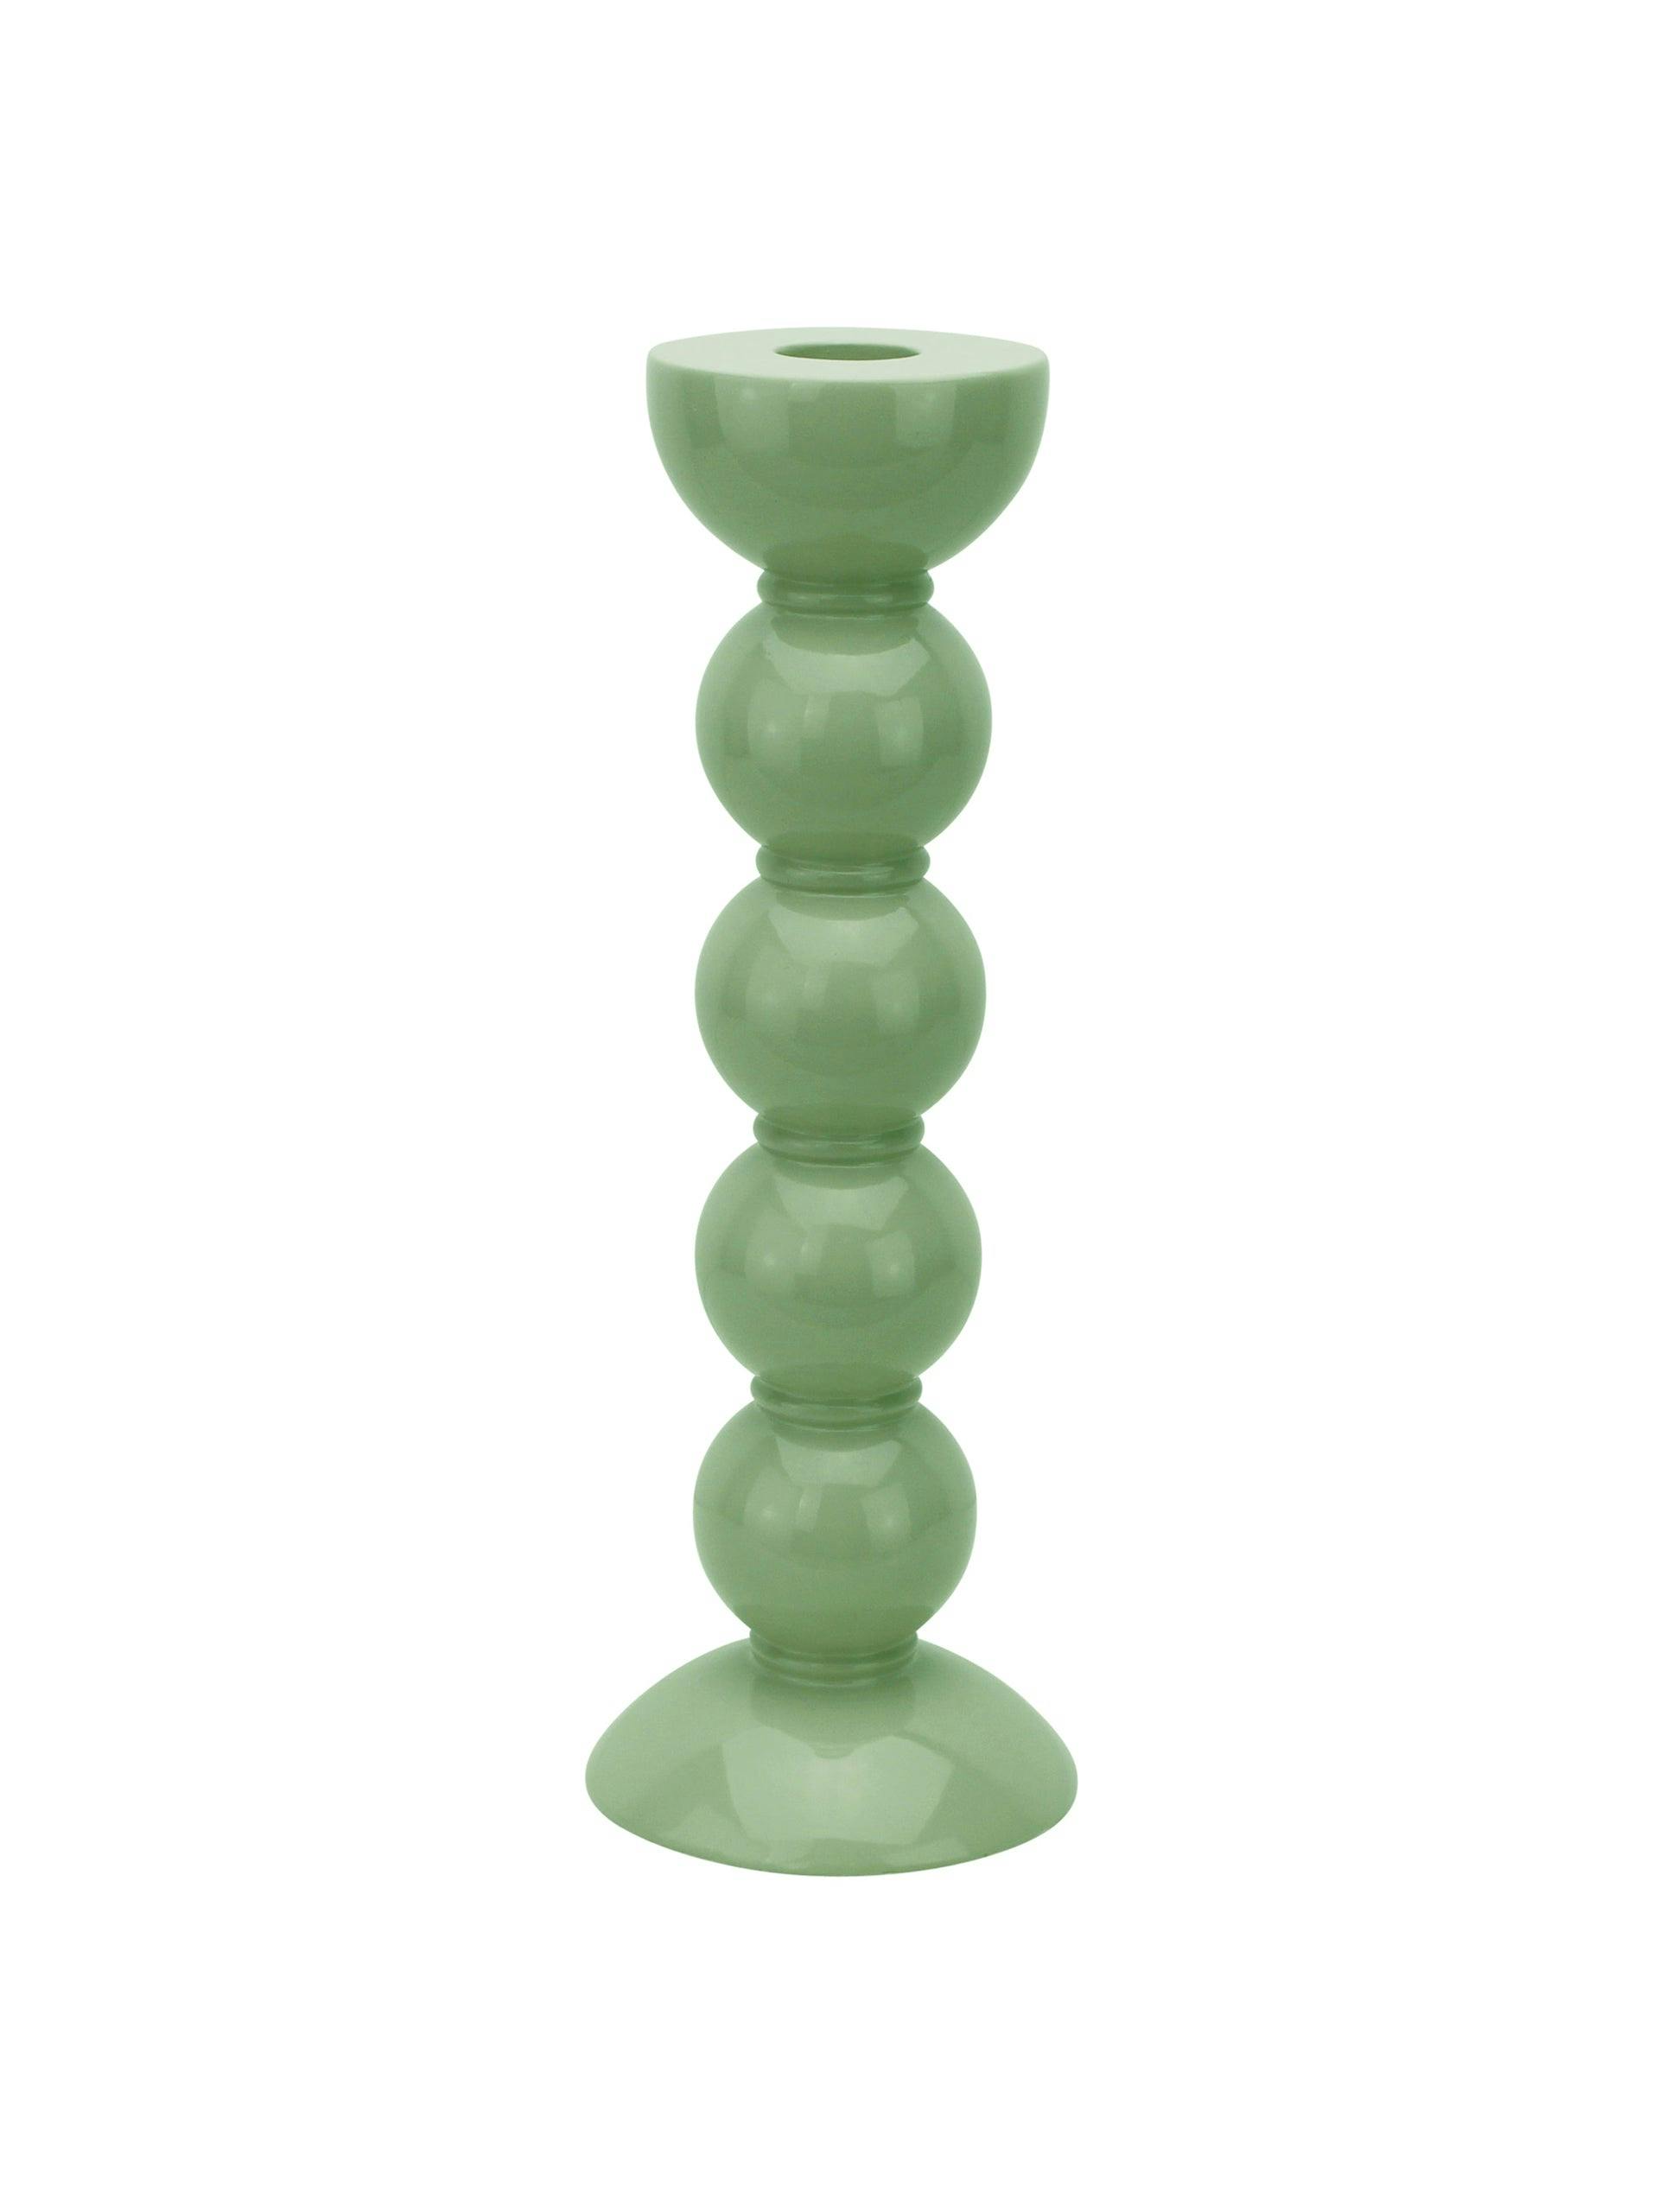 Tall bobbin candlestick in sage green